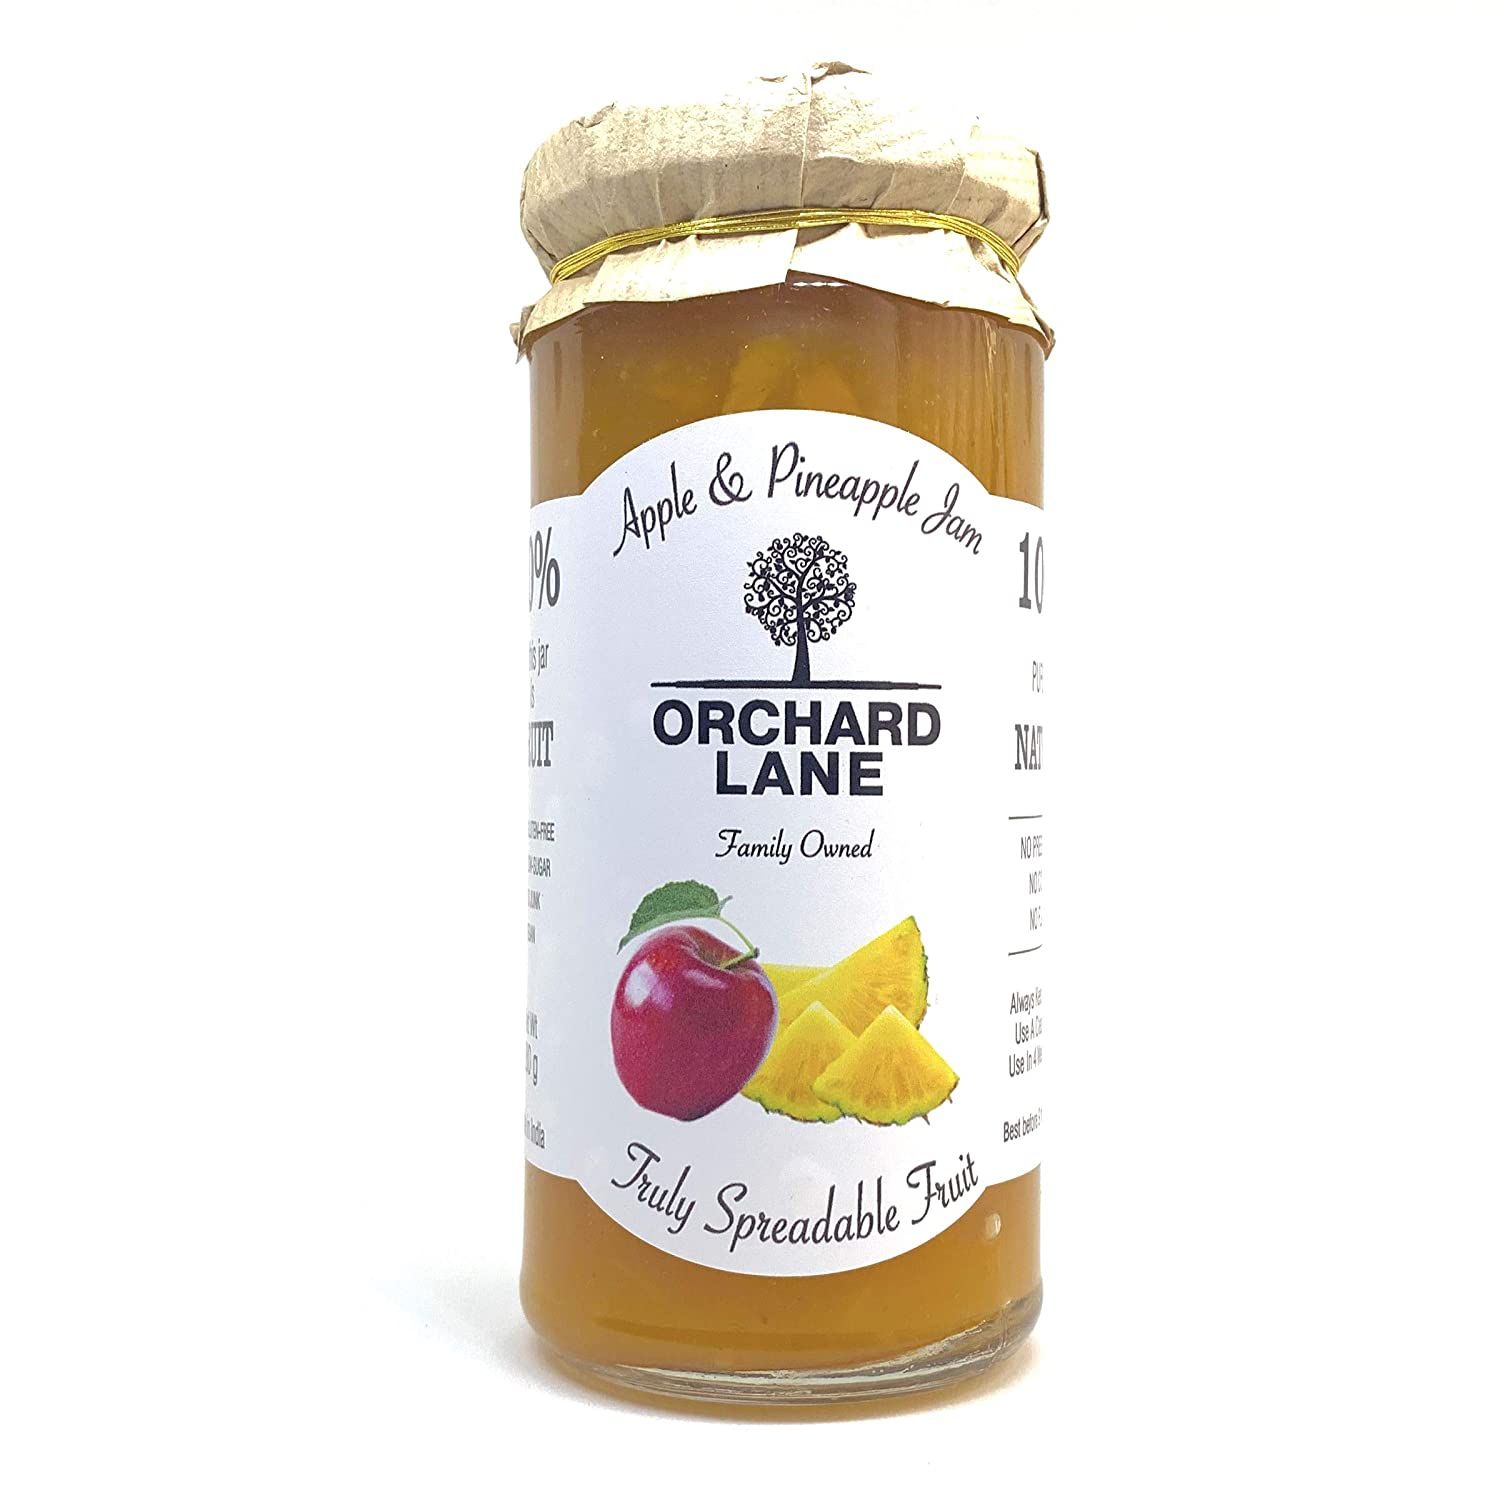 Orchard Lane Apple & Pineapple Jam Image